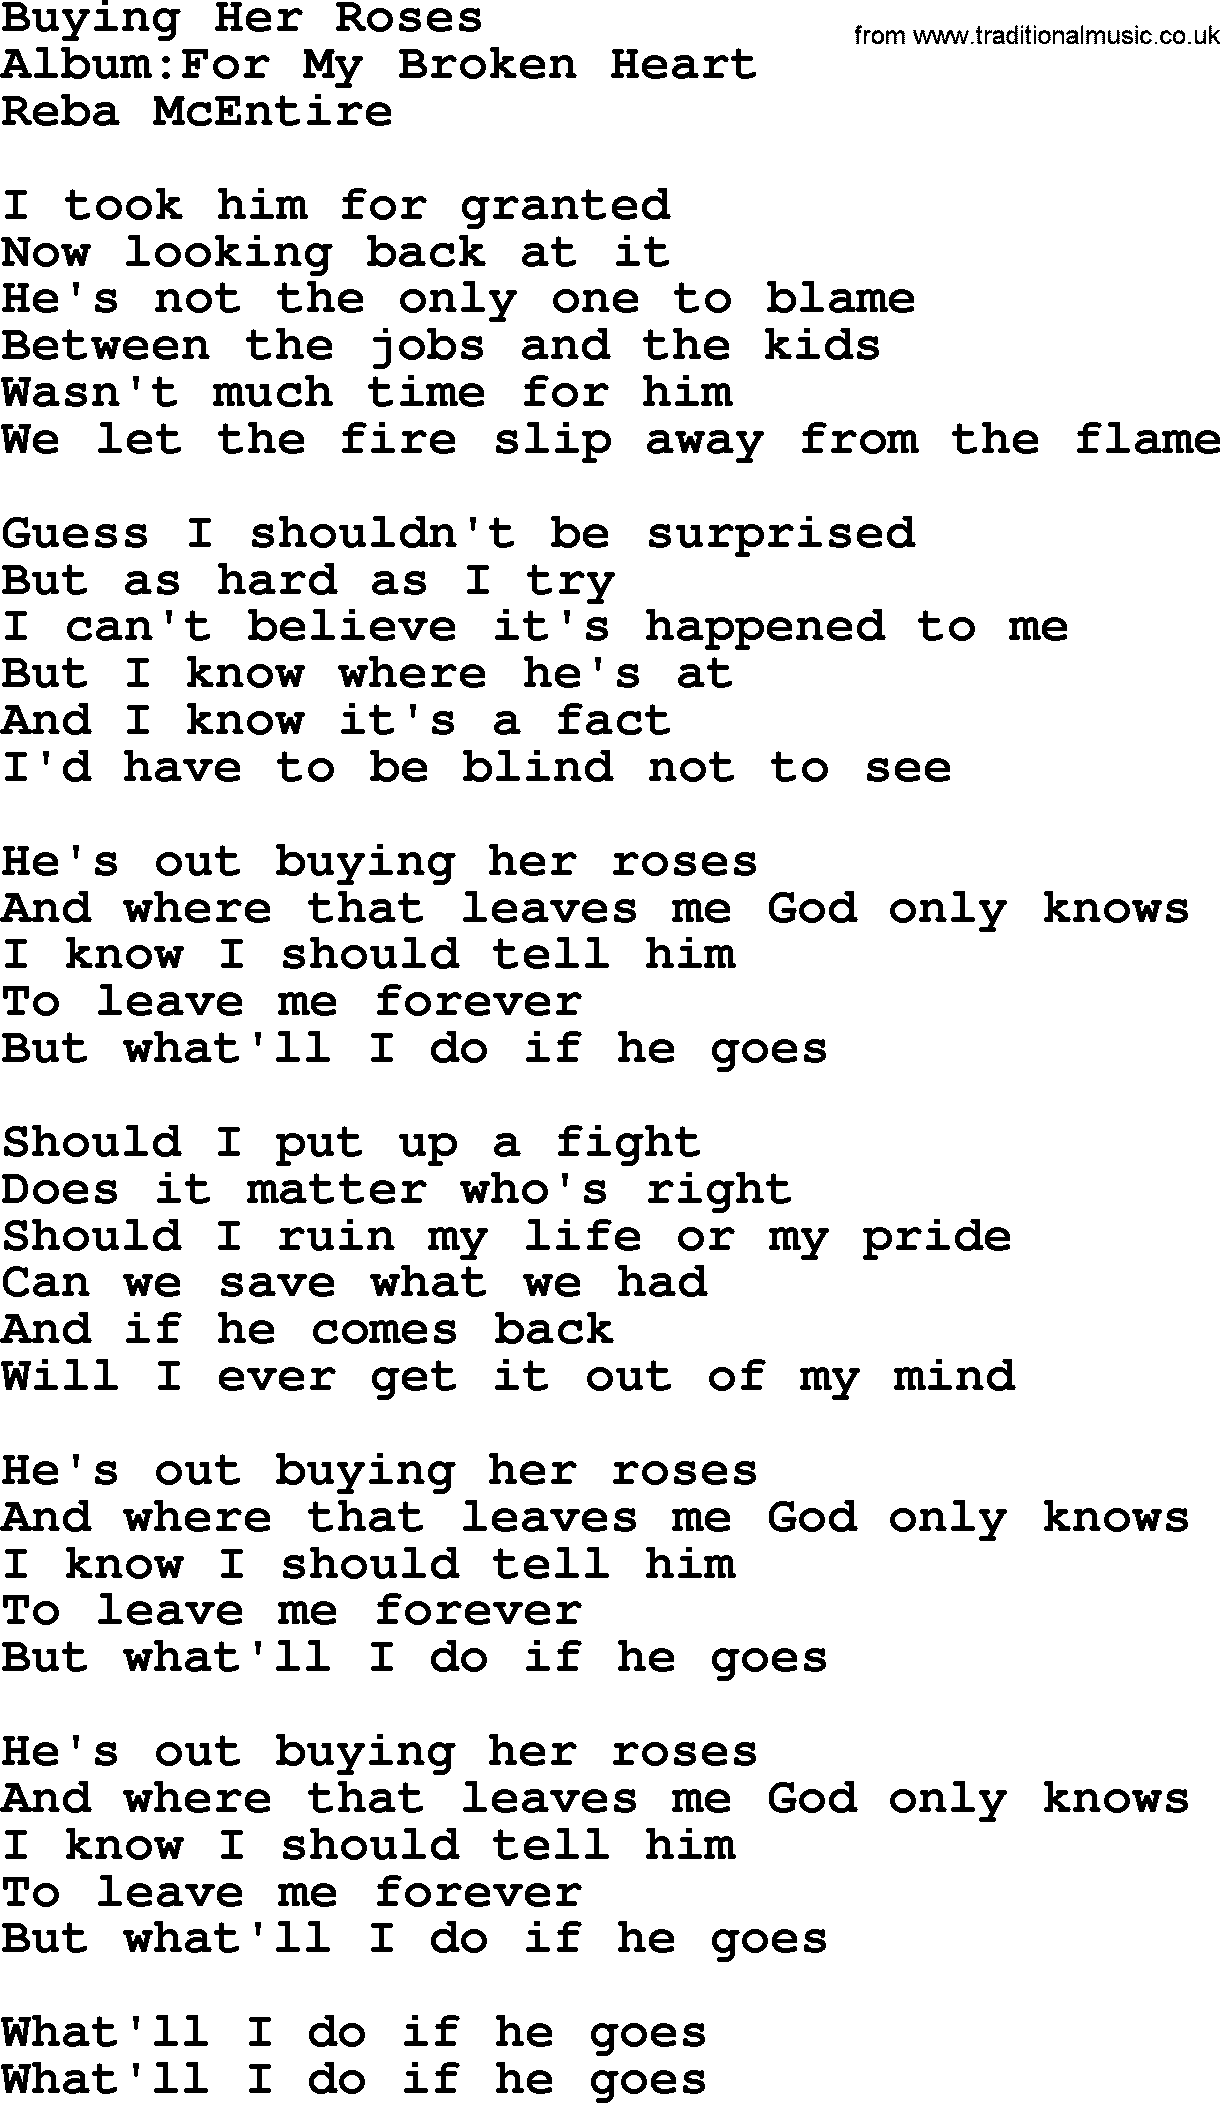 Reba McEntire song: Buying Her Roses lyrics